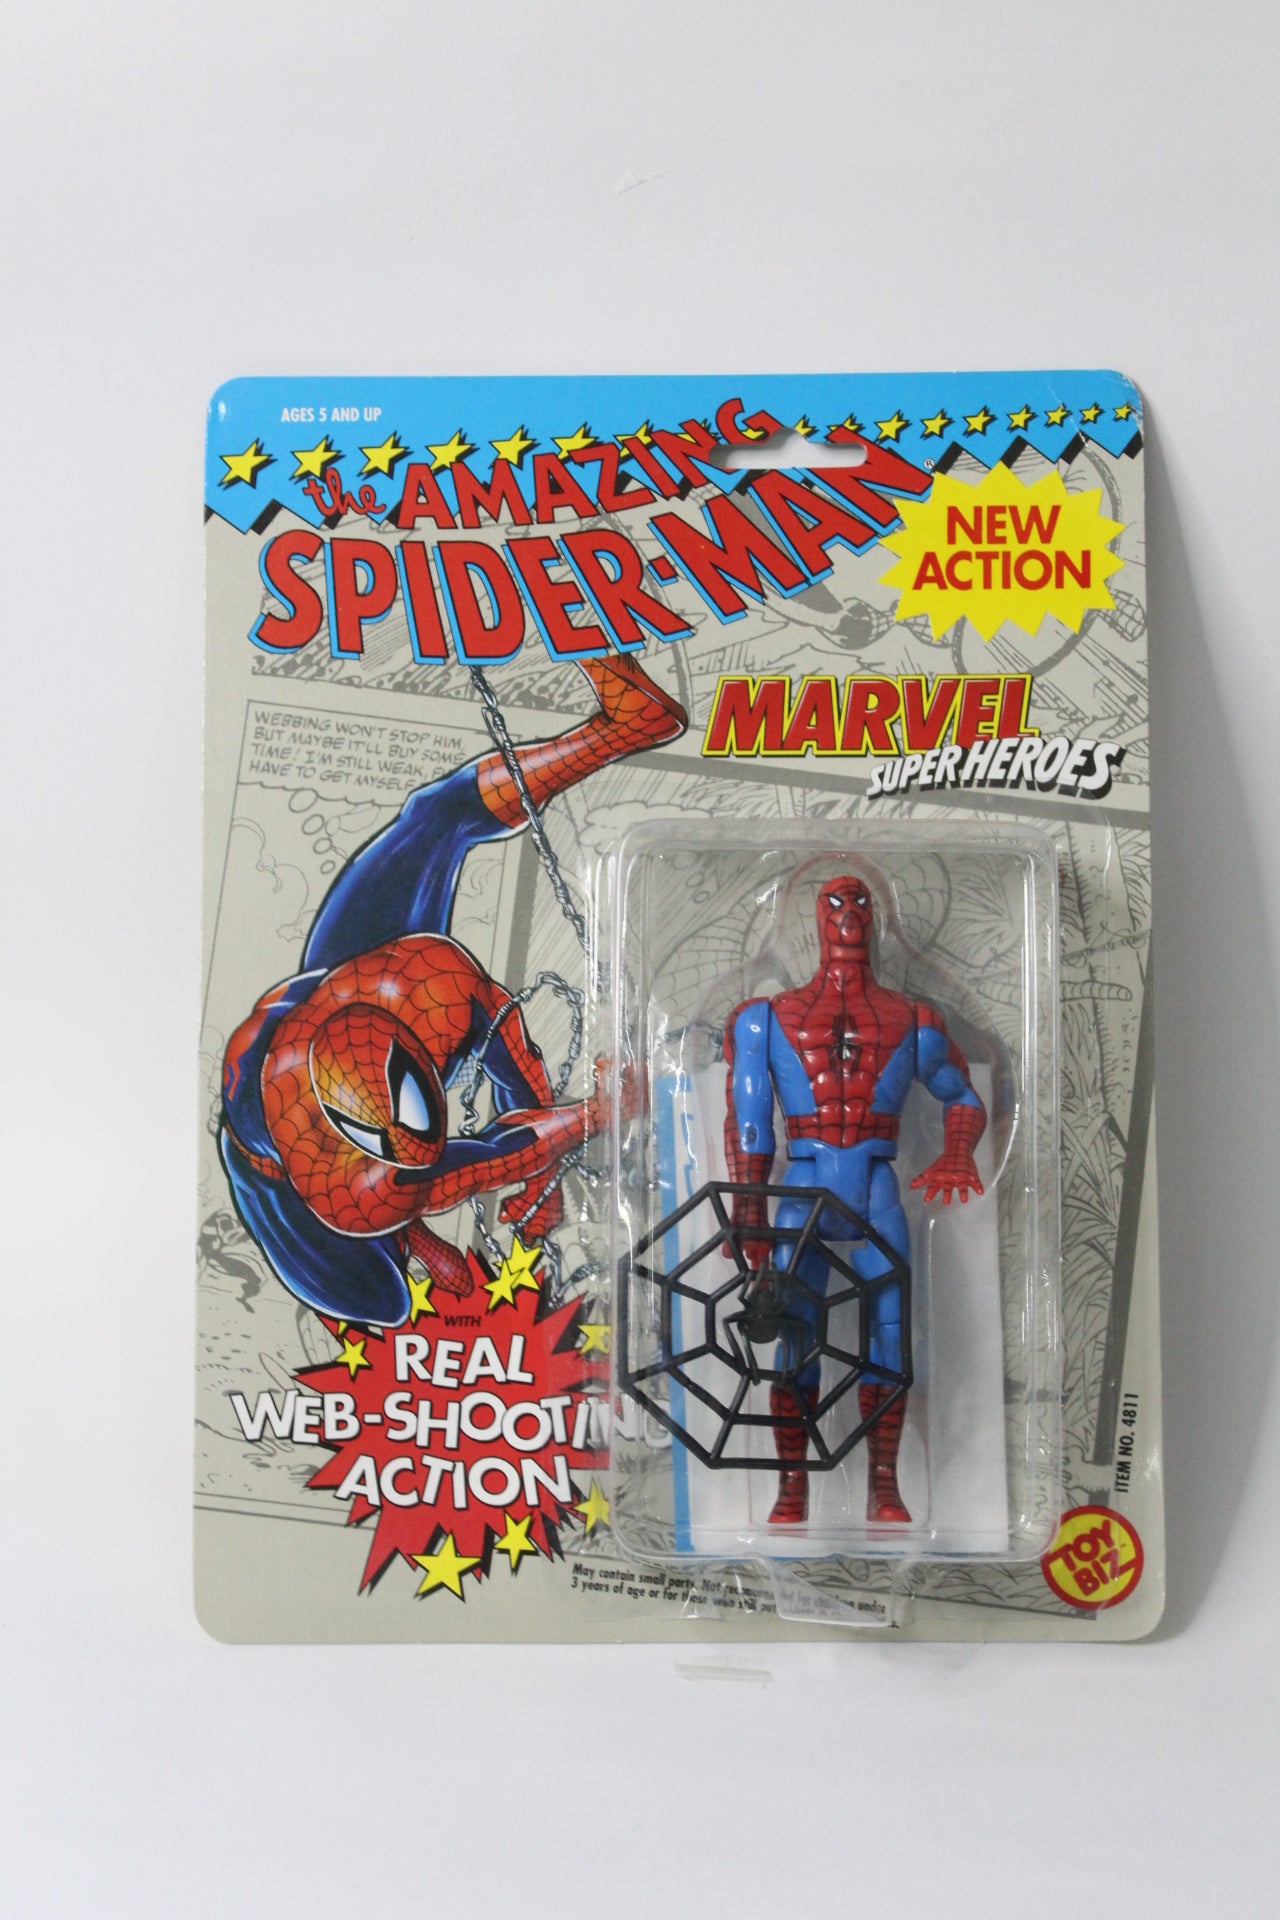 Spiderman Marvel Super Heroes (Real web-shooting action)Toybiz Vintage